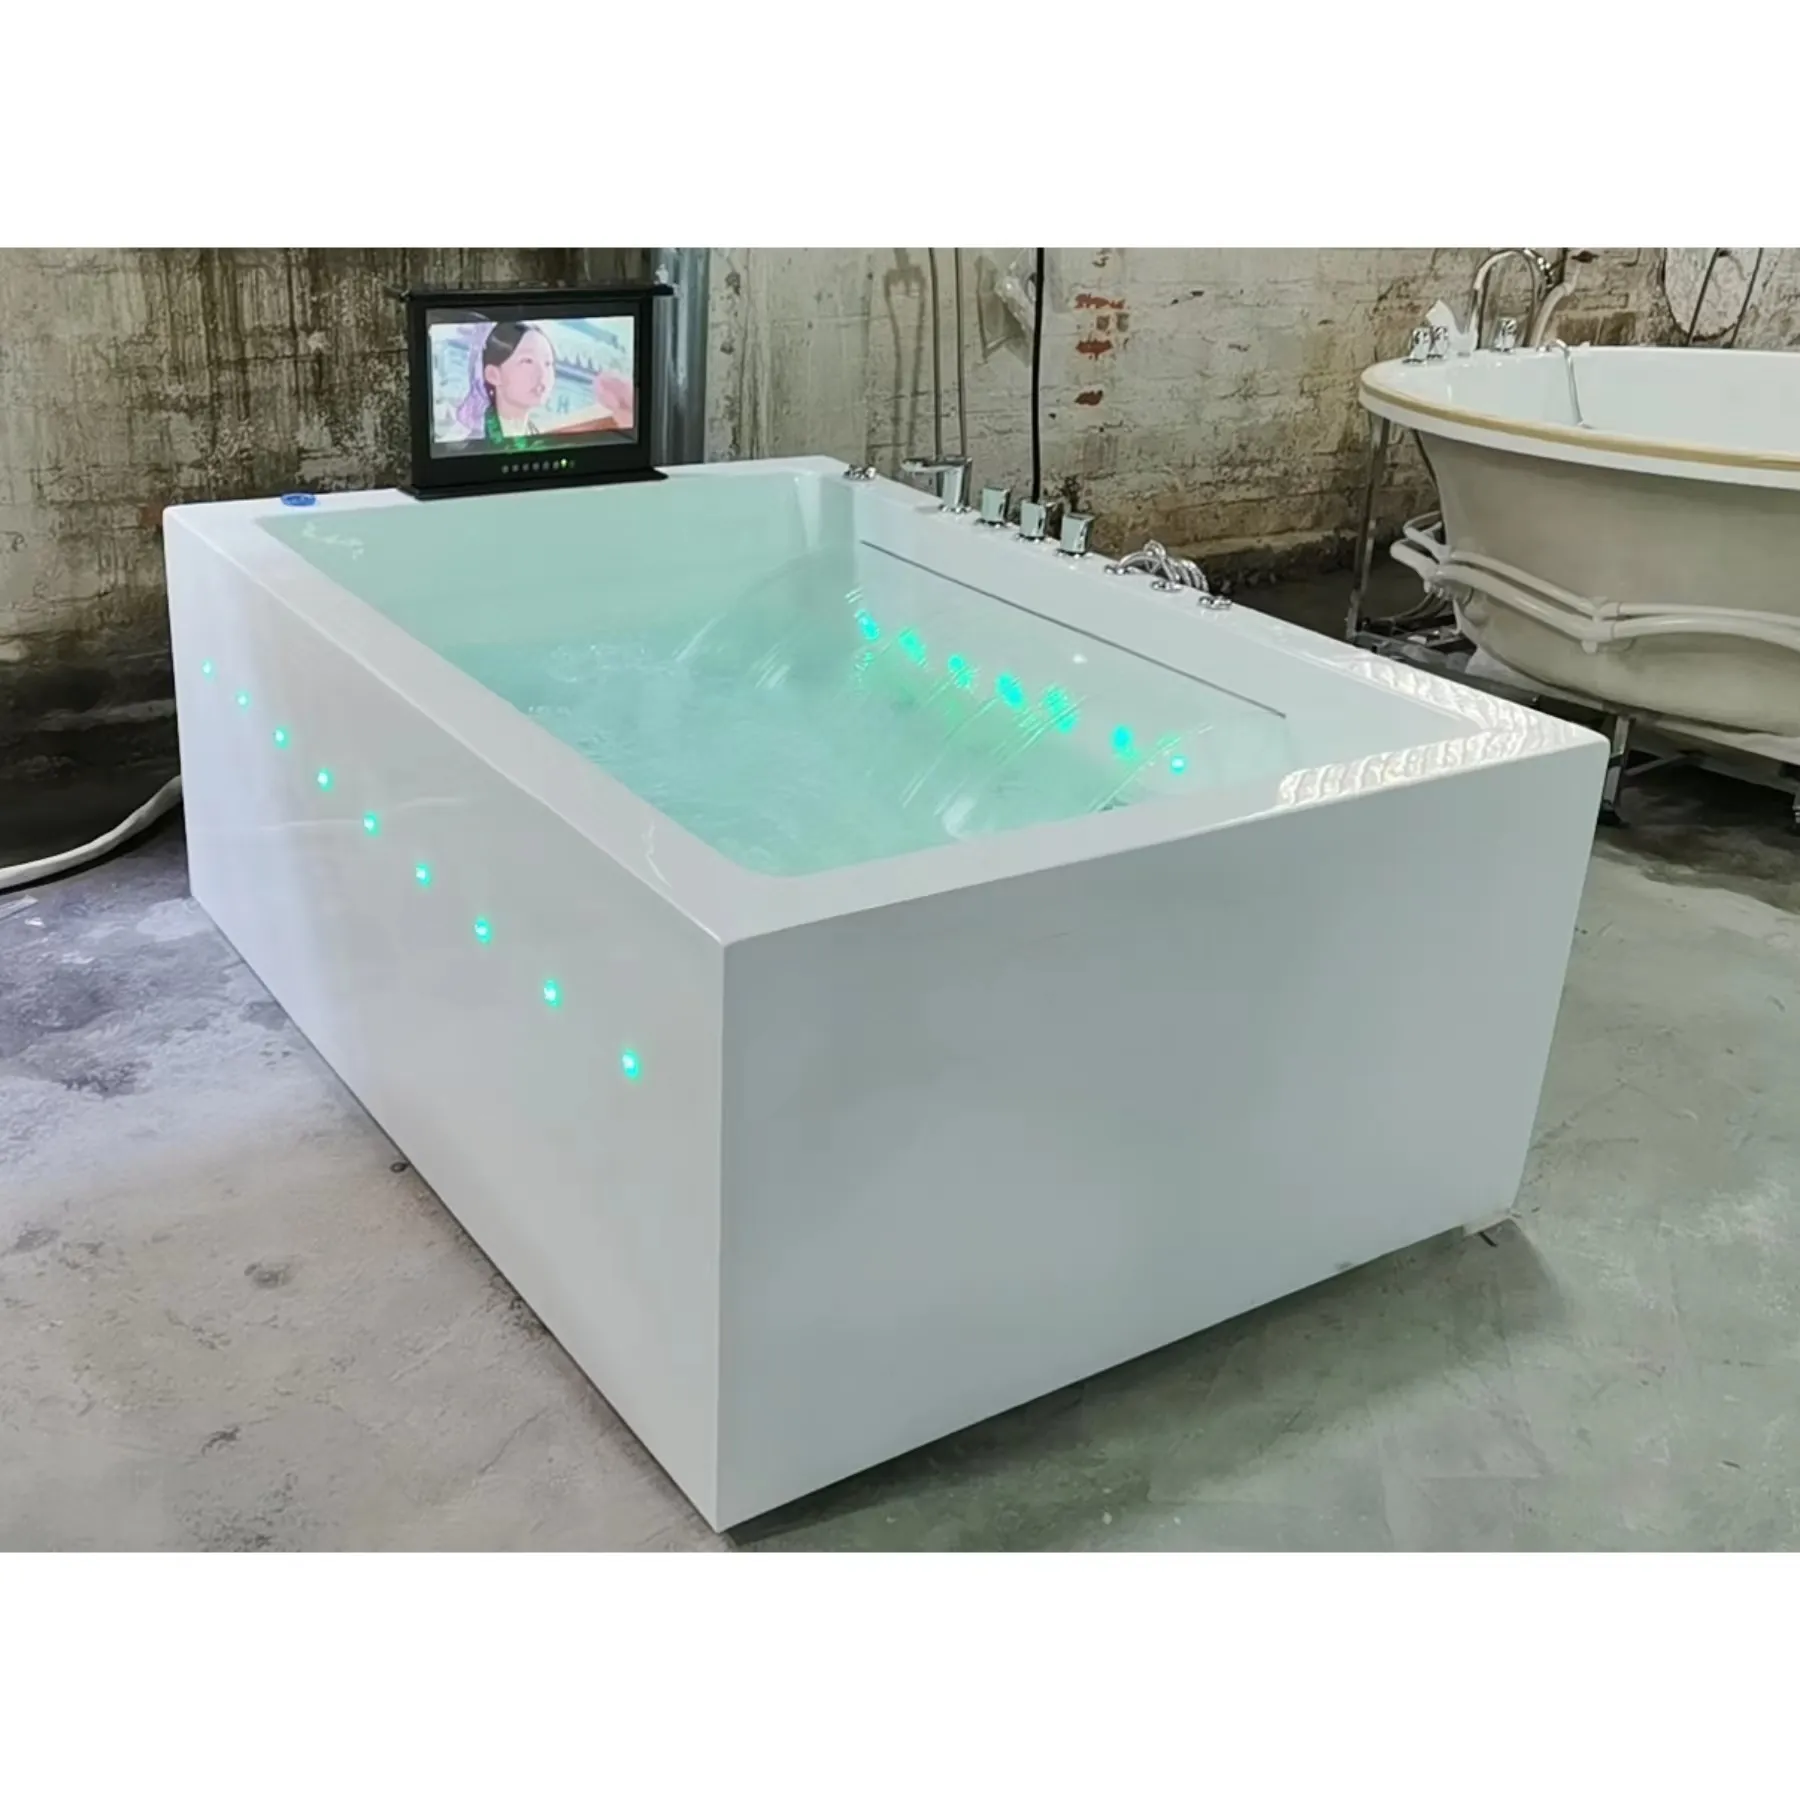 CBMmart Affordable design freestanding poland bathtub from foshan commercial bathroom sink large hot tub